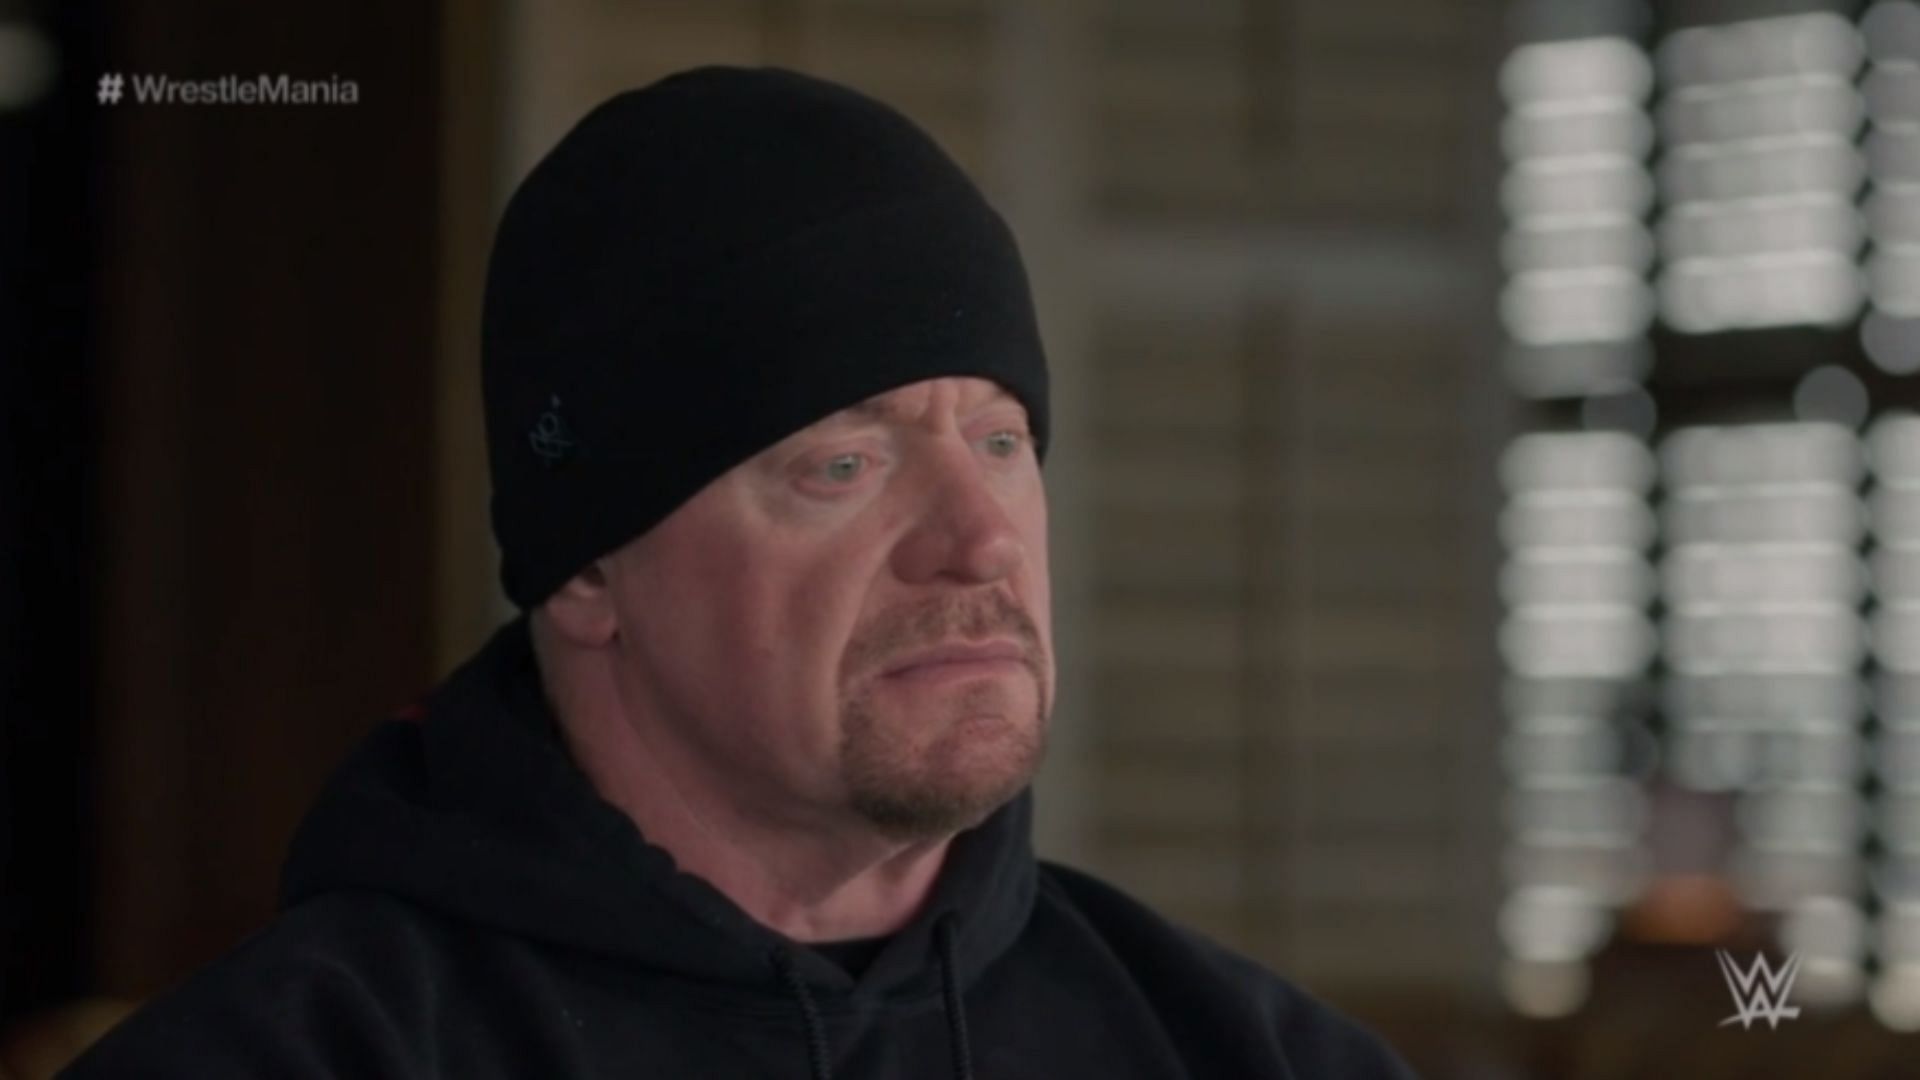 WWE Hall of Famer The Undertaker